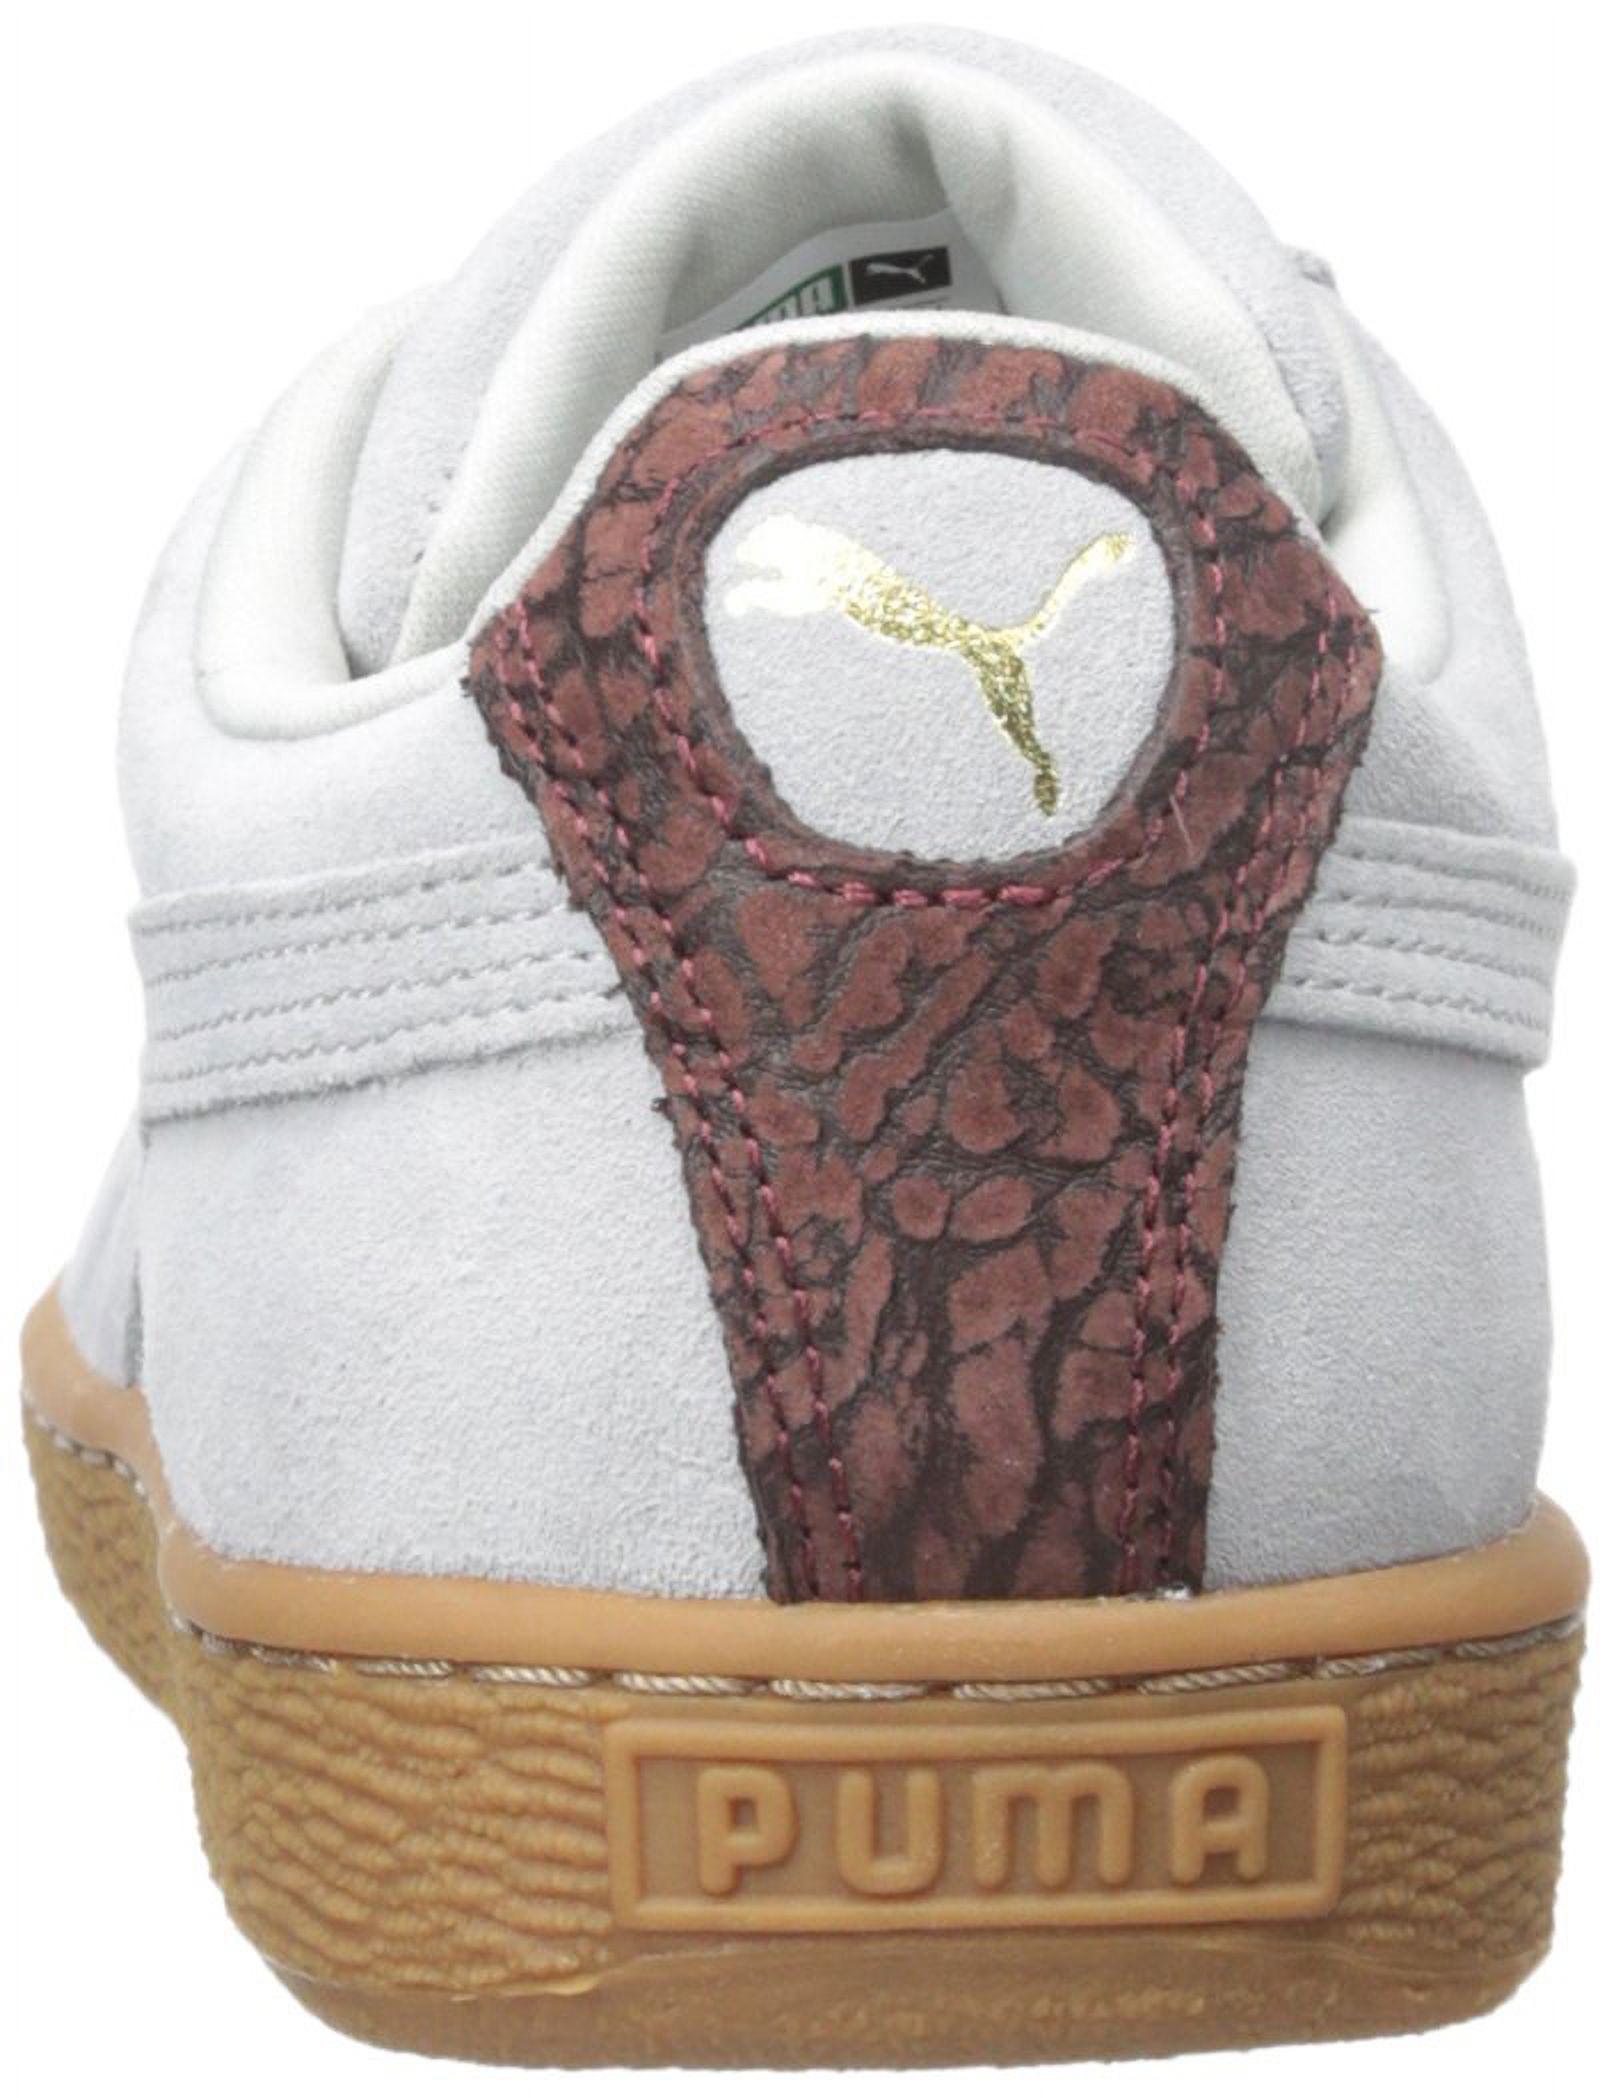 PUMA Men's Suede Classic Casual Fashion Sneakers, Glacier Gray/Oxblood - image 3 of 8